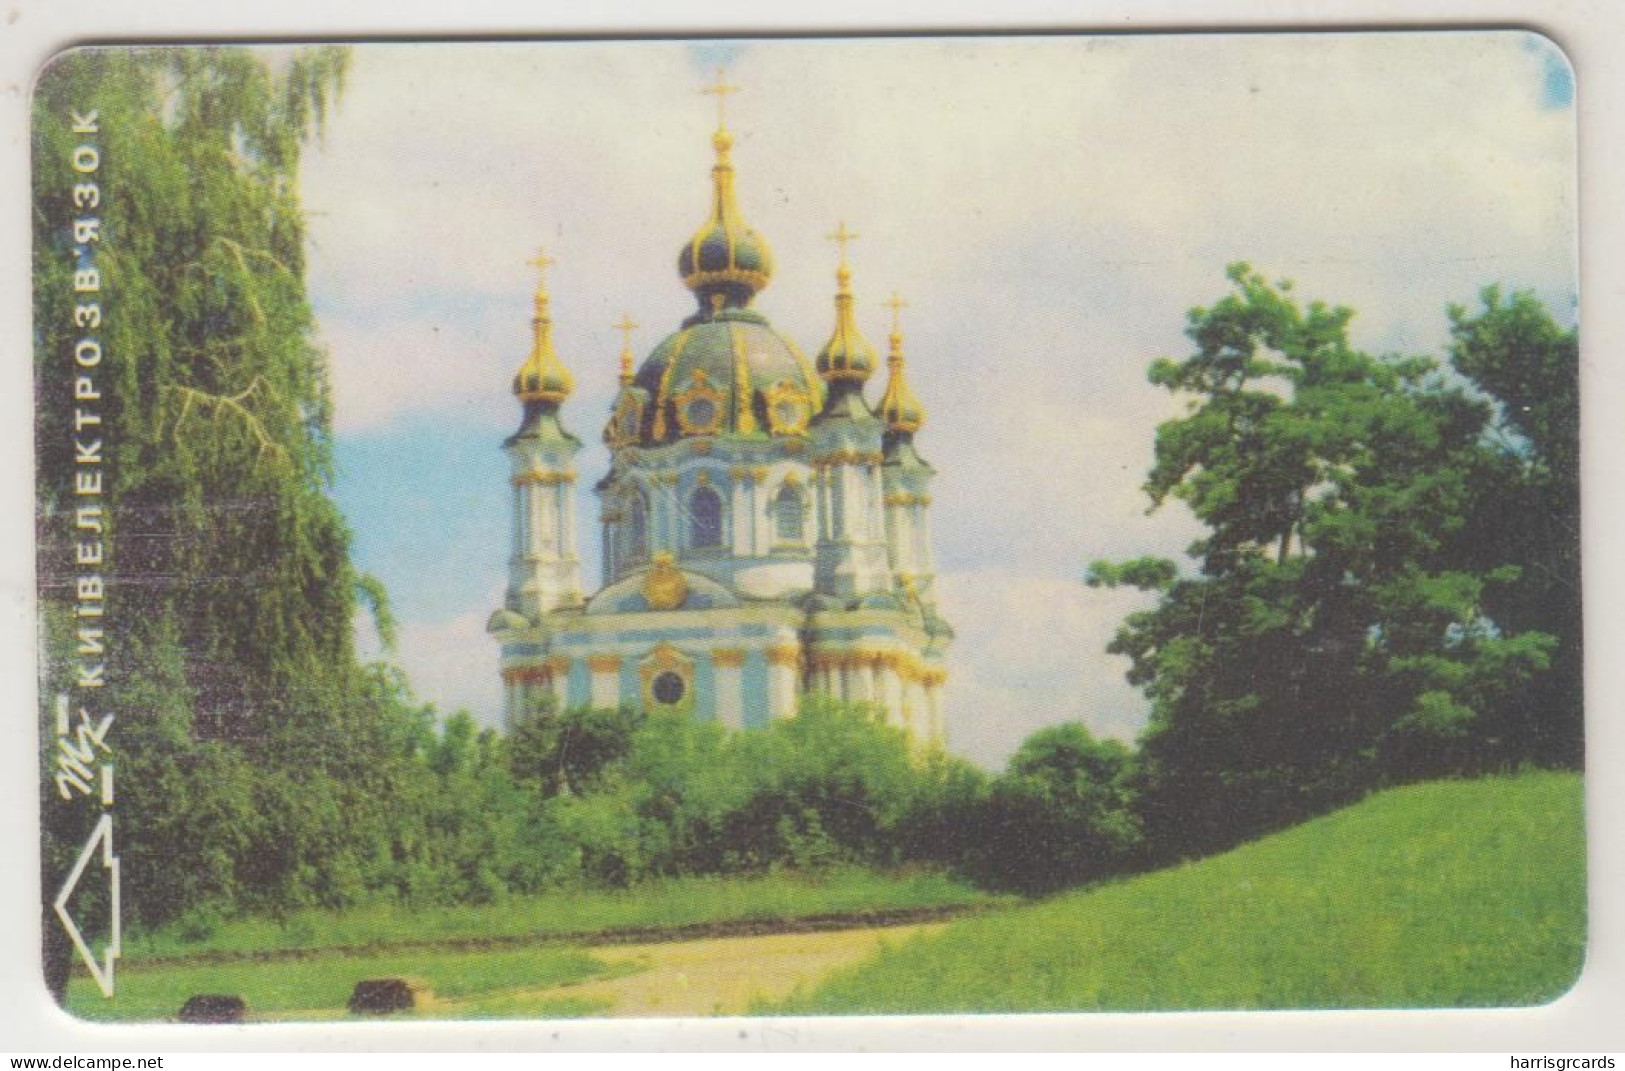 UKRAINE - St.Andrew Cathedral, Ukrtelecom 1st Issues Kiev, 1120 U, Tirage 150.000, Used - Ucraina